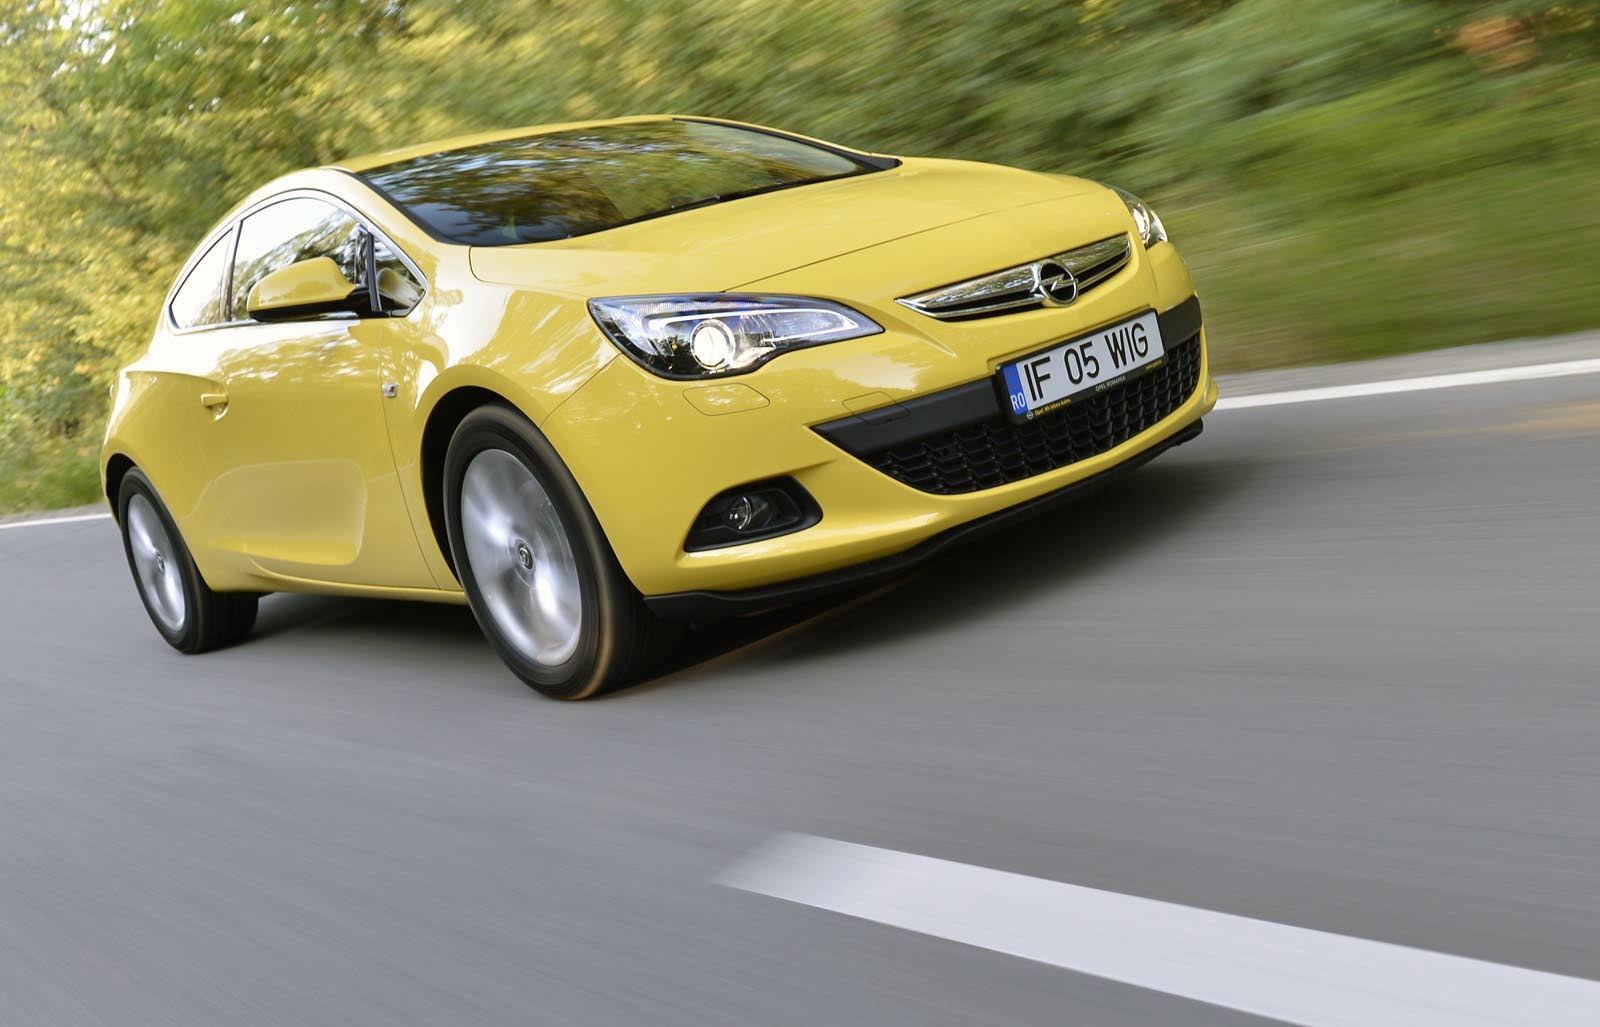 In modul sport, Opel GTC Astra Turbo devine mult mai fun de condus